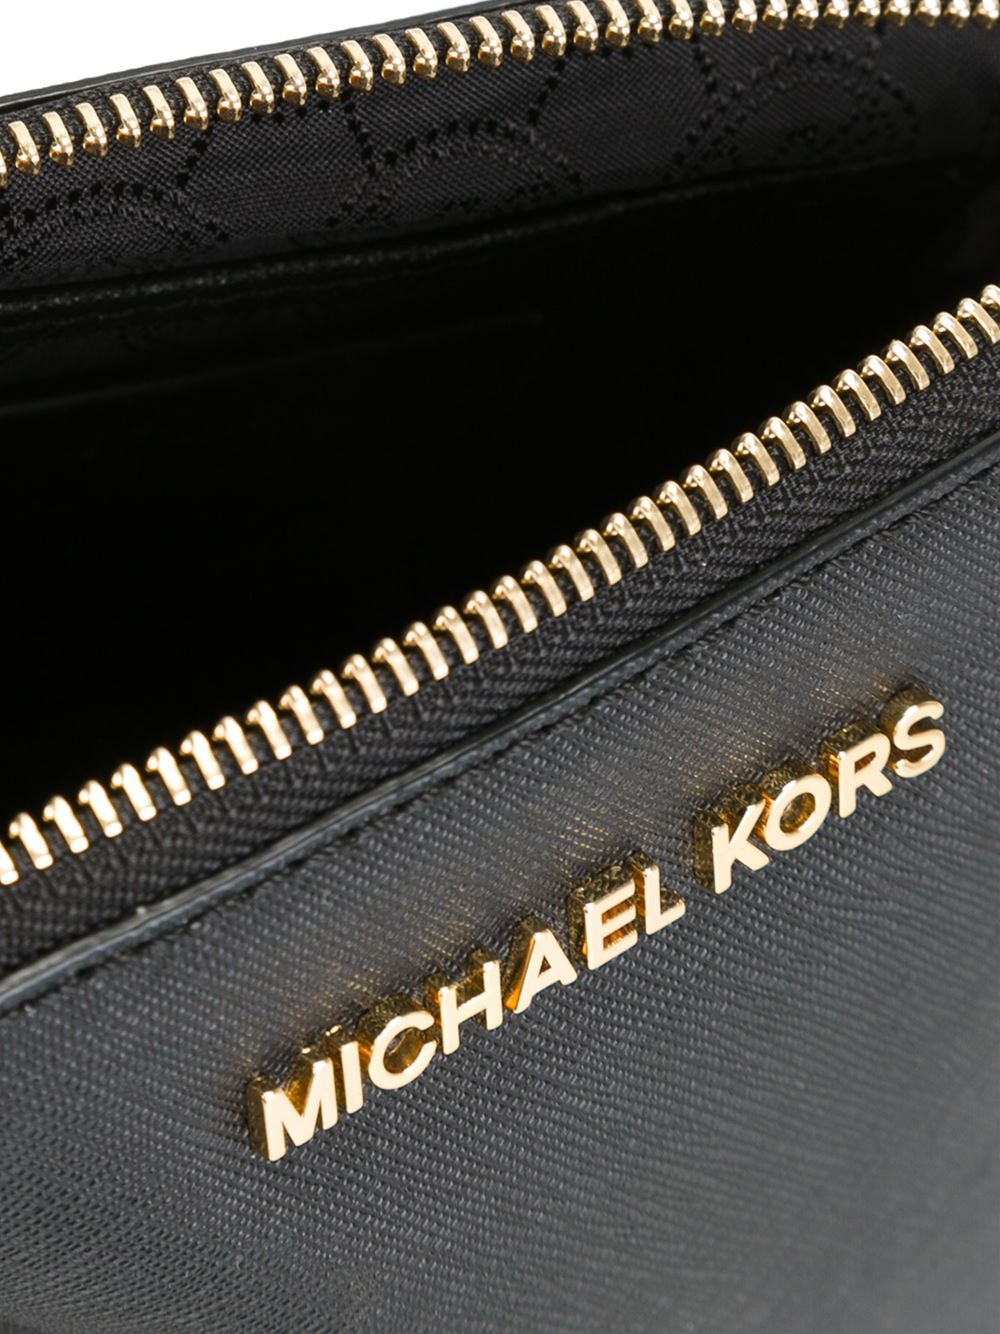 MICHAEL Michael Kors Leather Cindy Makeup Bag in Black - Lyst